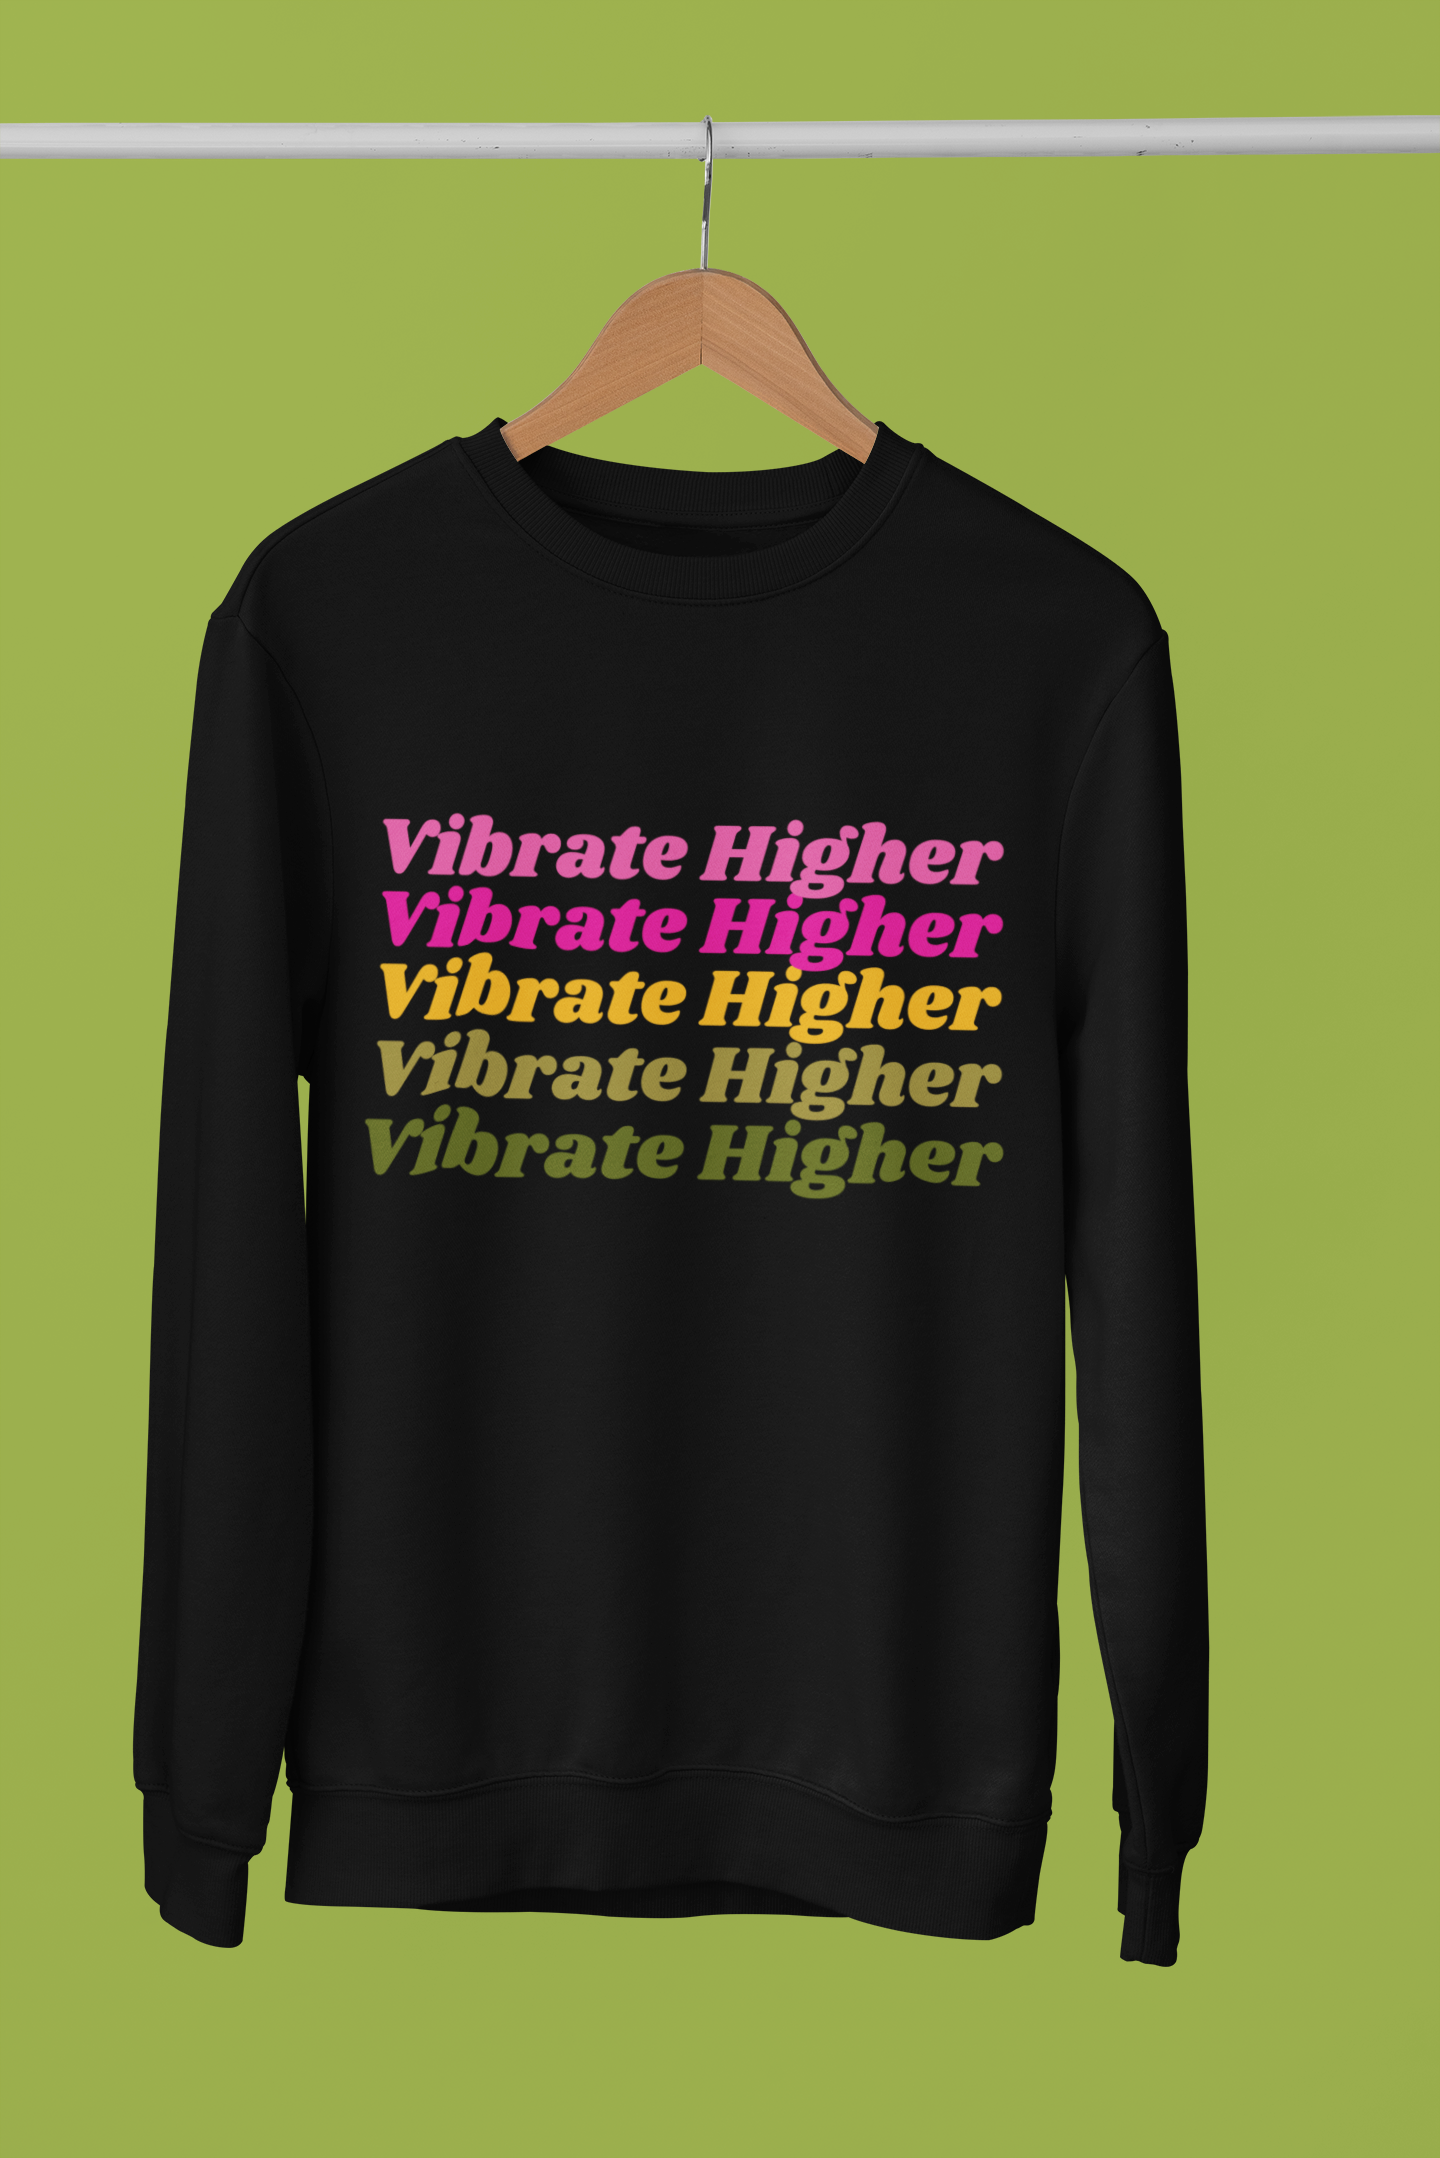 The Vibrate Higher Sweatshirt